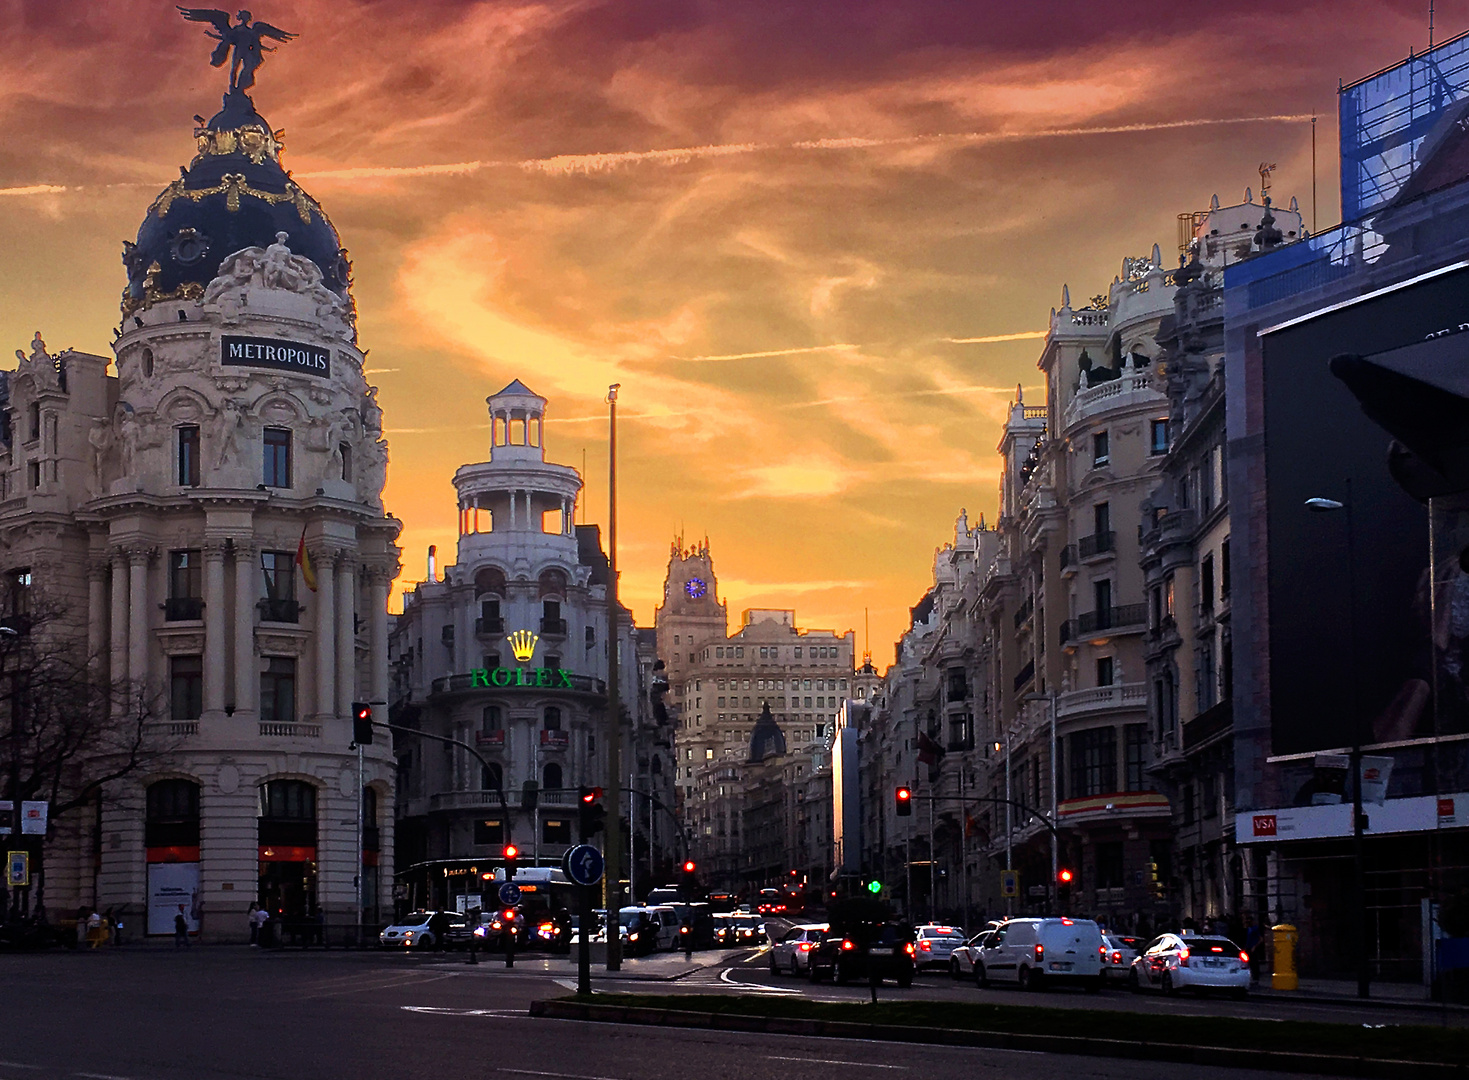 "Metropolis at Sunset" Madrid/ Spain